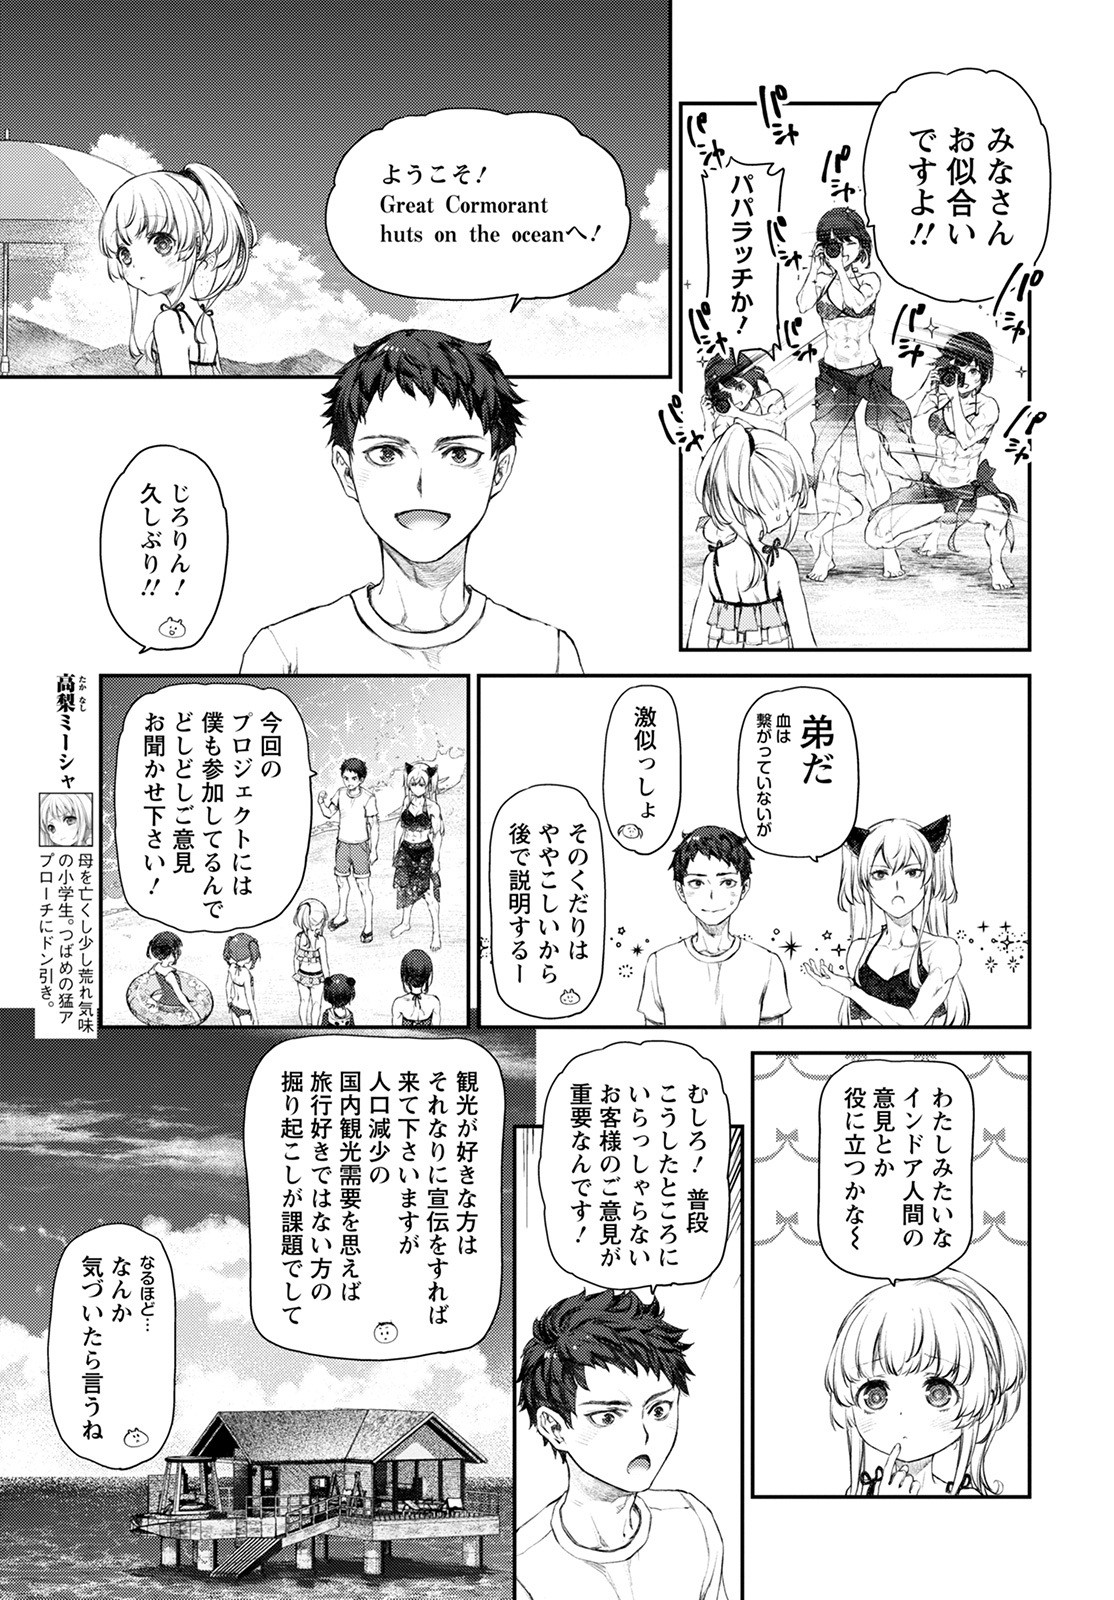 Uchi no Maid ga Uzasugiru! - Chapter 51 - Page 3